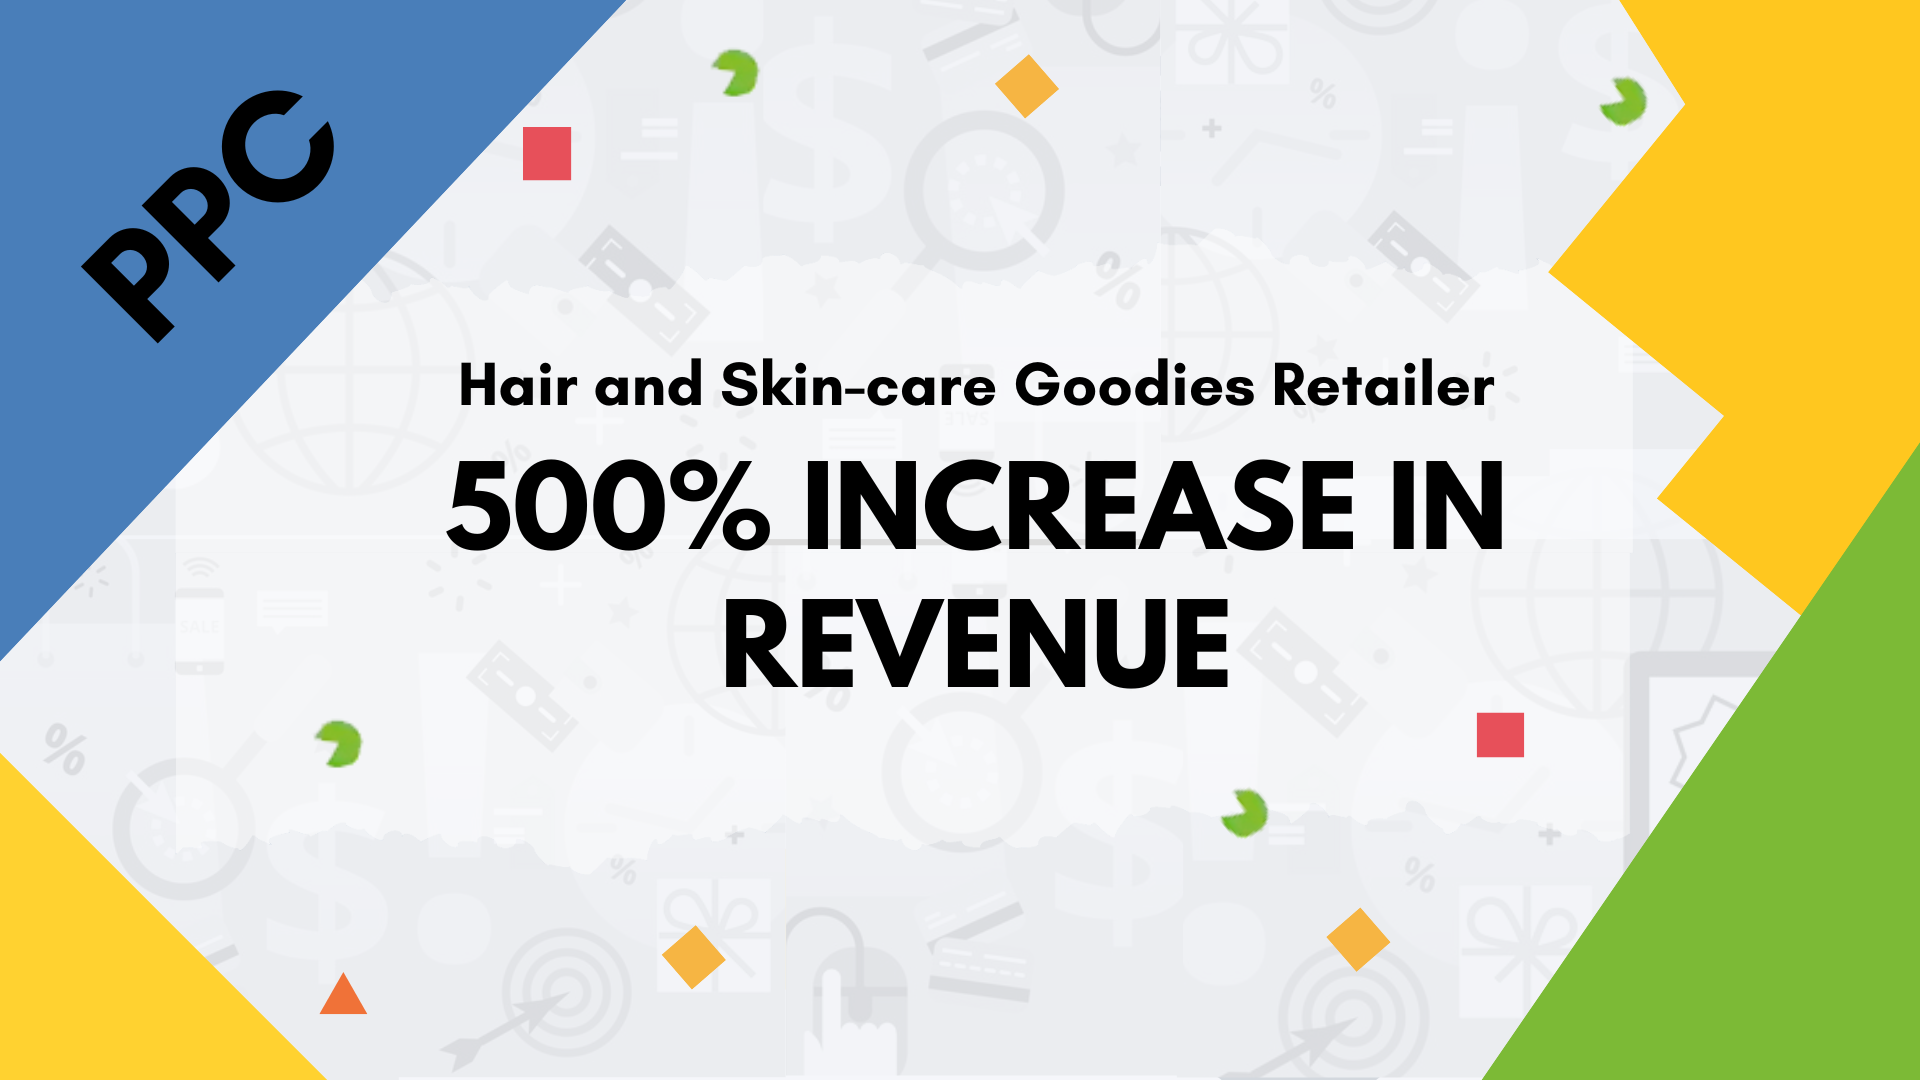 Hair and Skin-care Goodies retailer